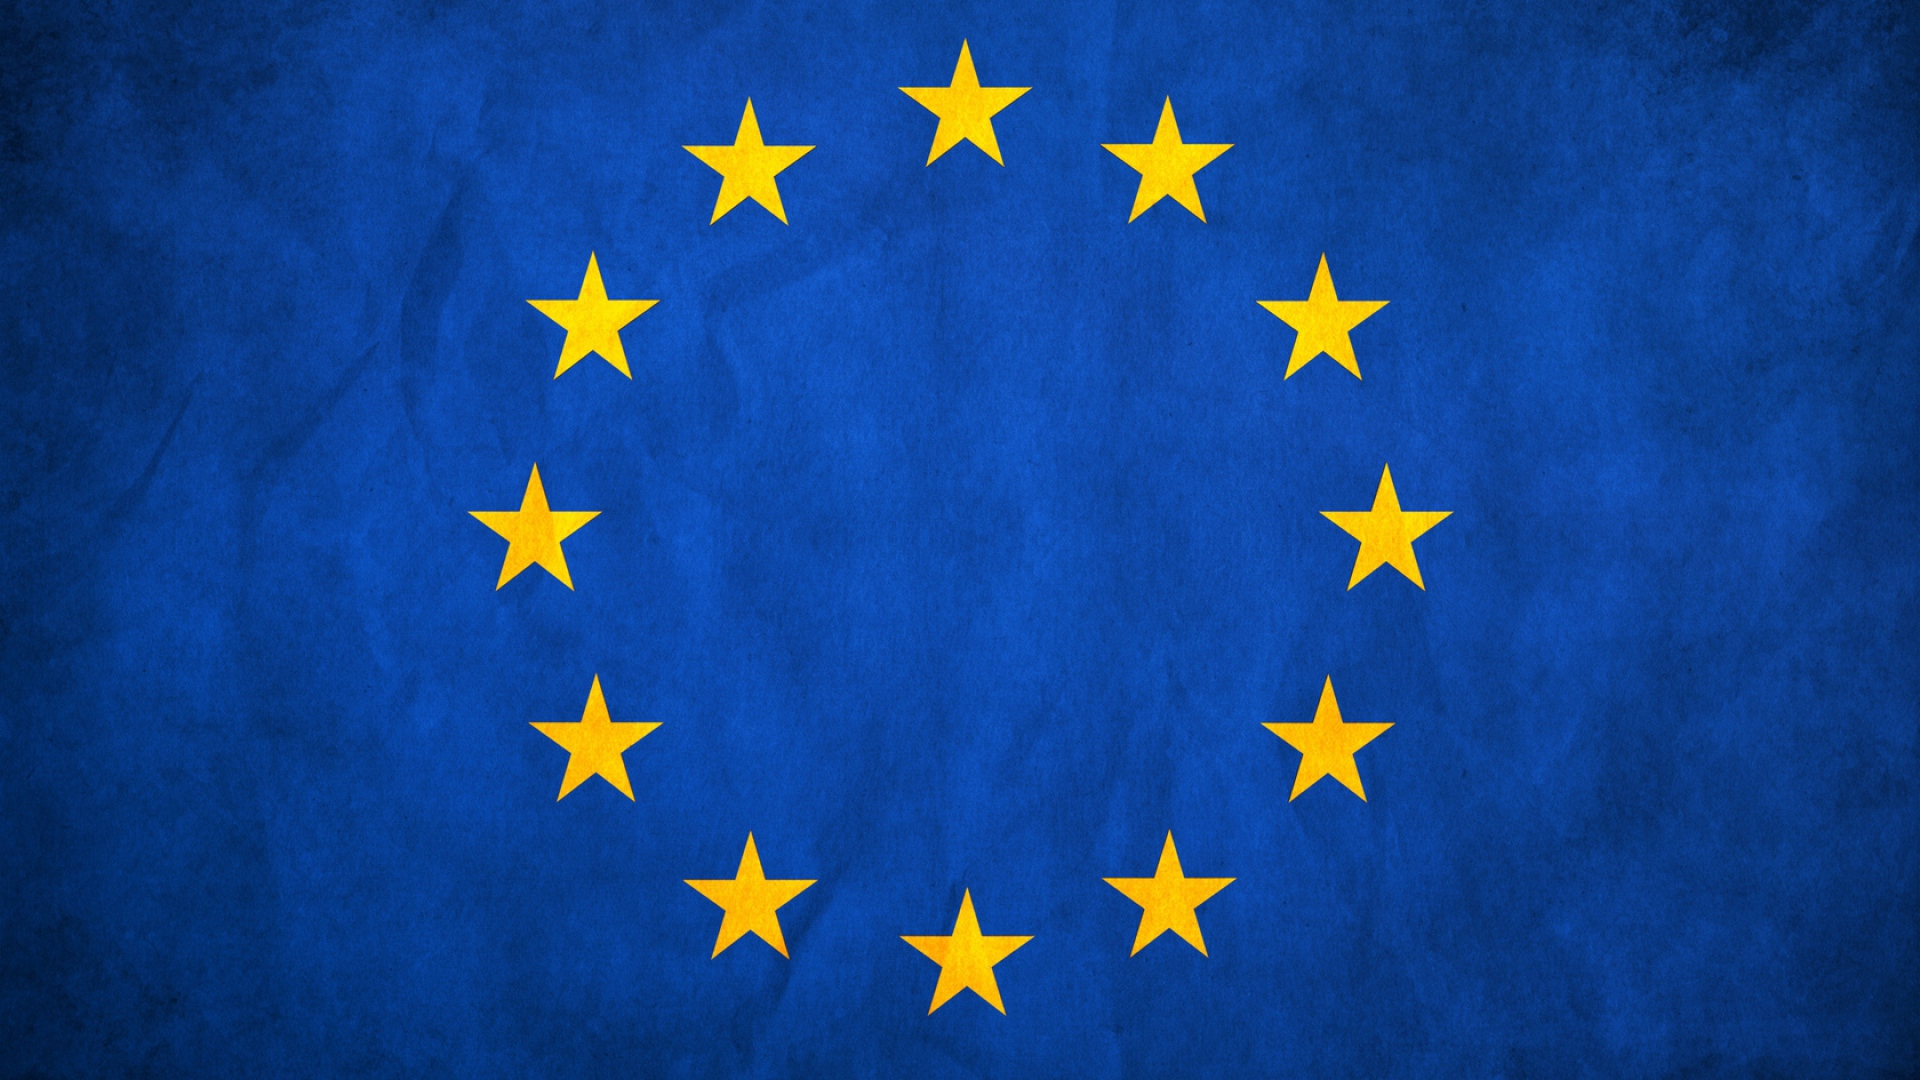 Download Wallpaper 1920x1080 European union, Flag, Stars, Europe ...